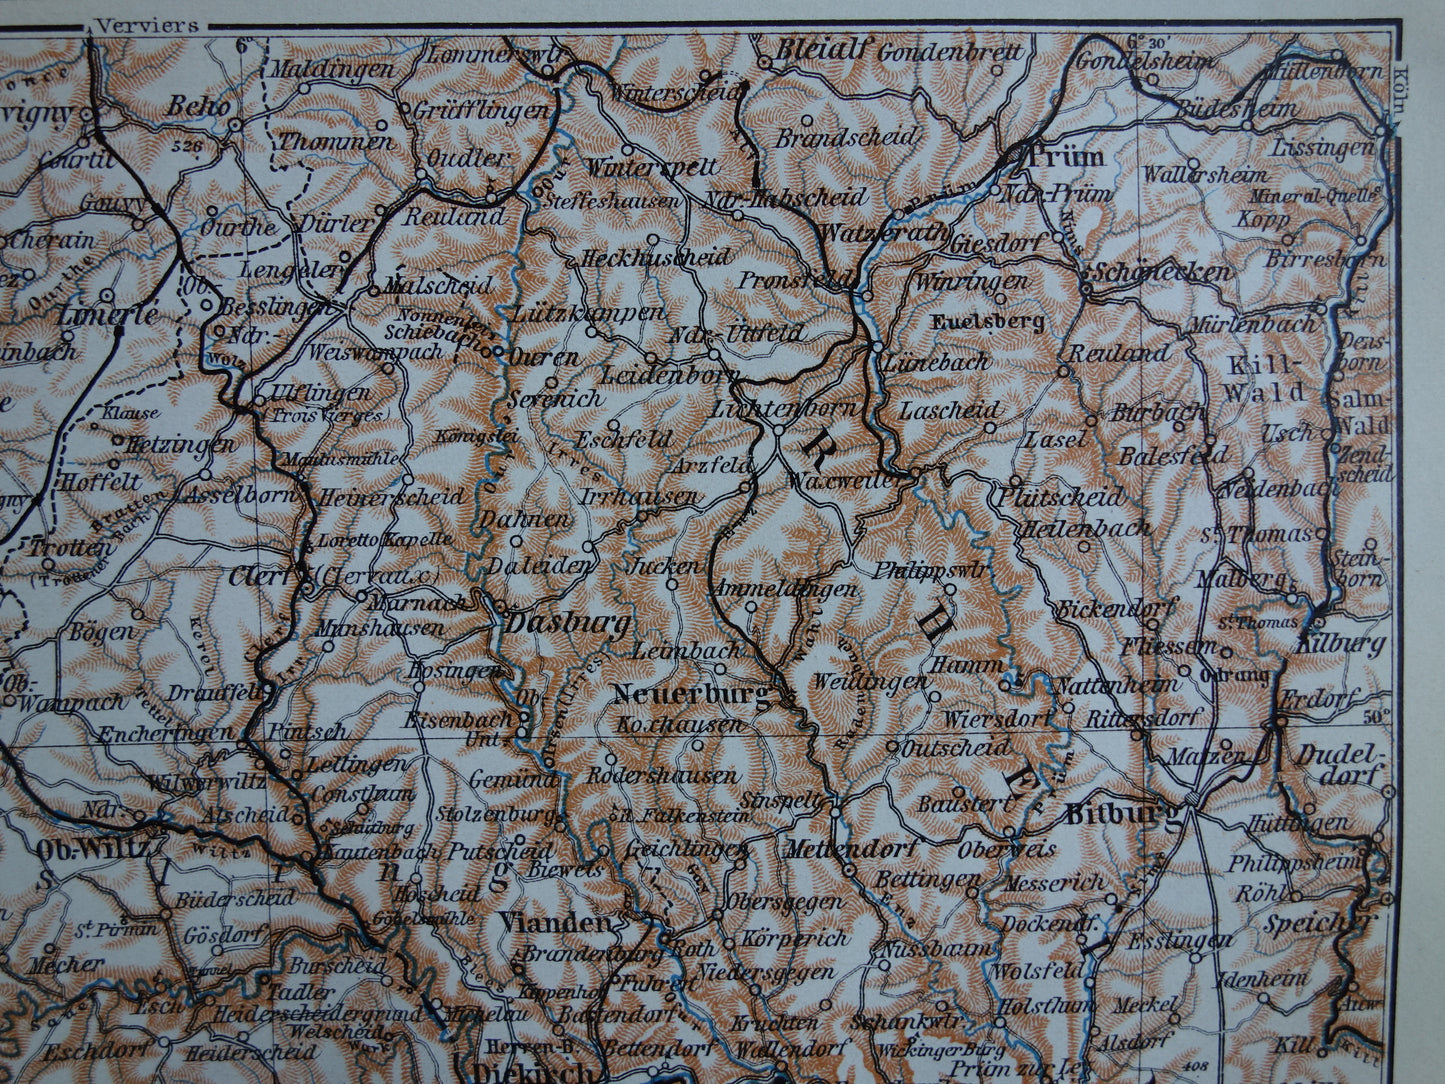 LUXEMBURG oude kaart van Luxemburg uit 1910 kleine originele antieke landkaart